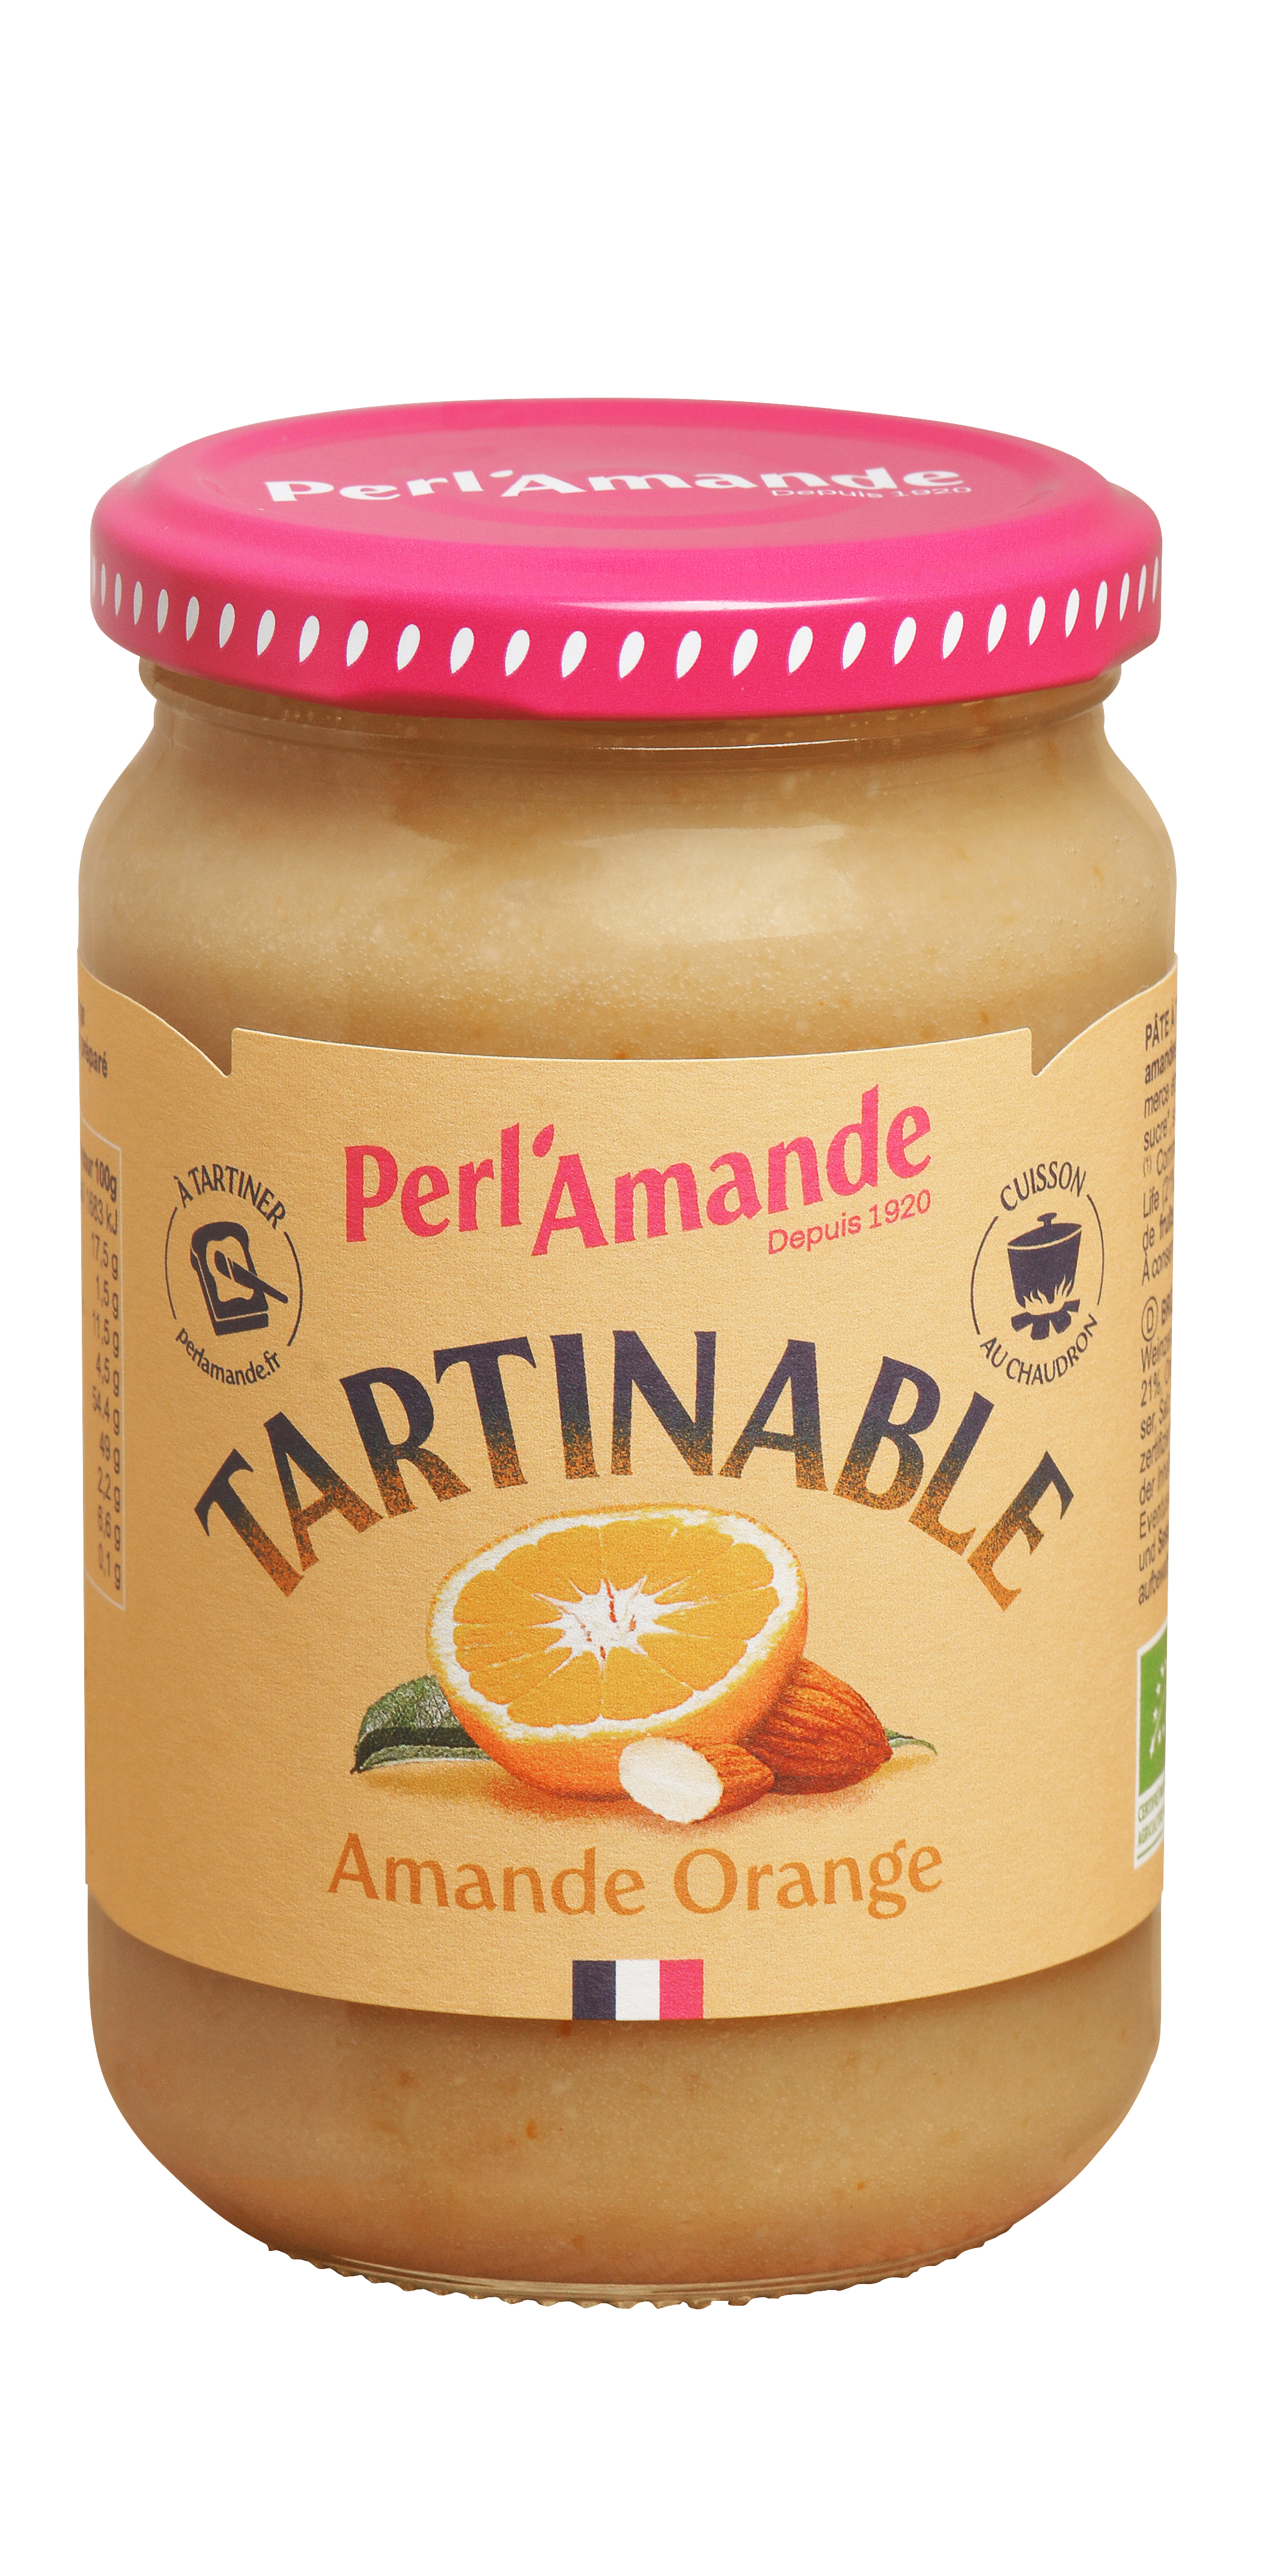 Perl'amande Tartinade amande-orange s.gluten bio & cru 300g